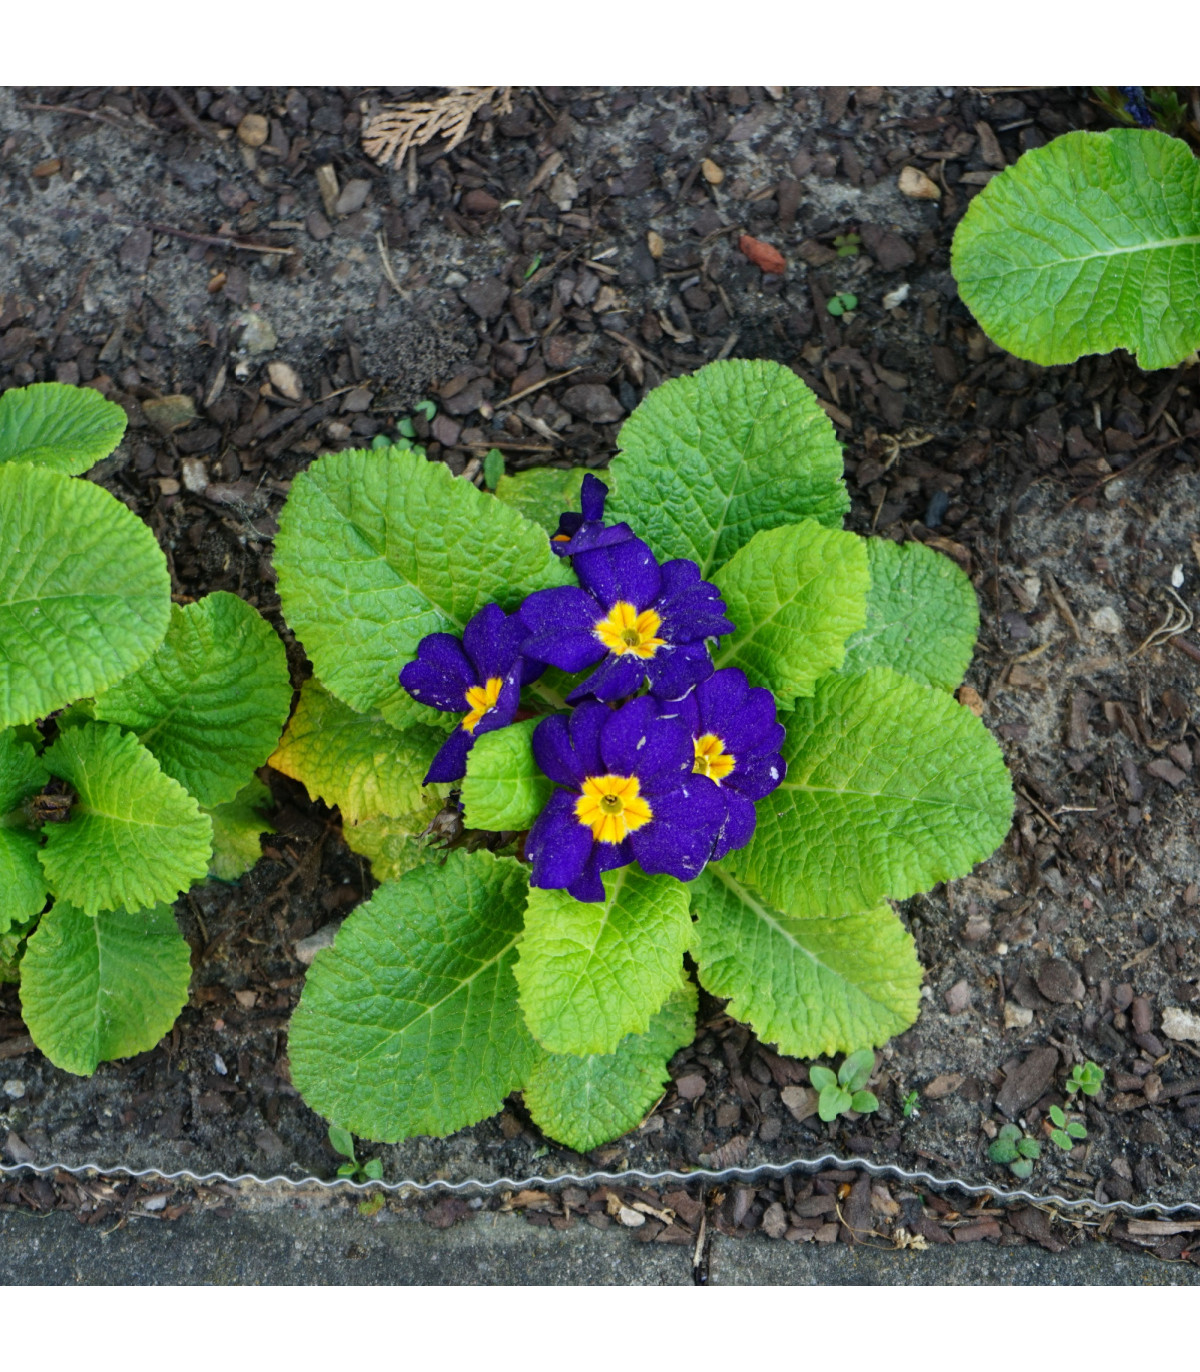 Prvosienka Inara F1 Late Blue - Primula elatior - predaj semien - 20 ks